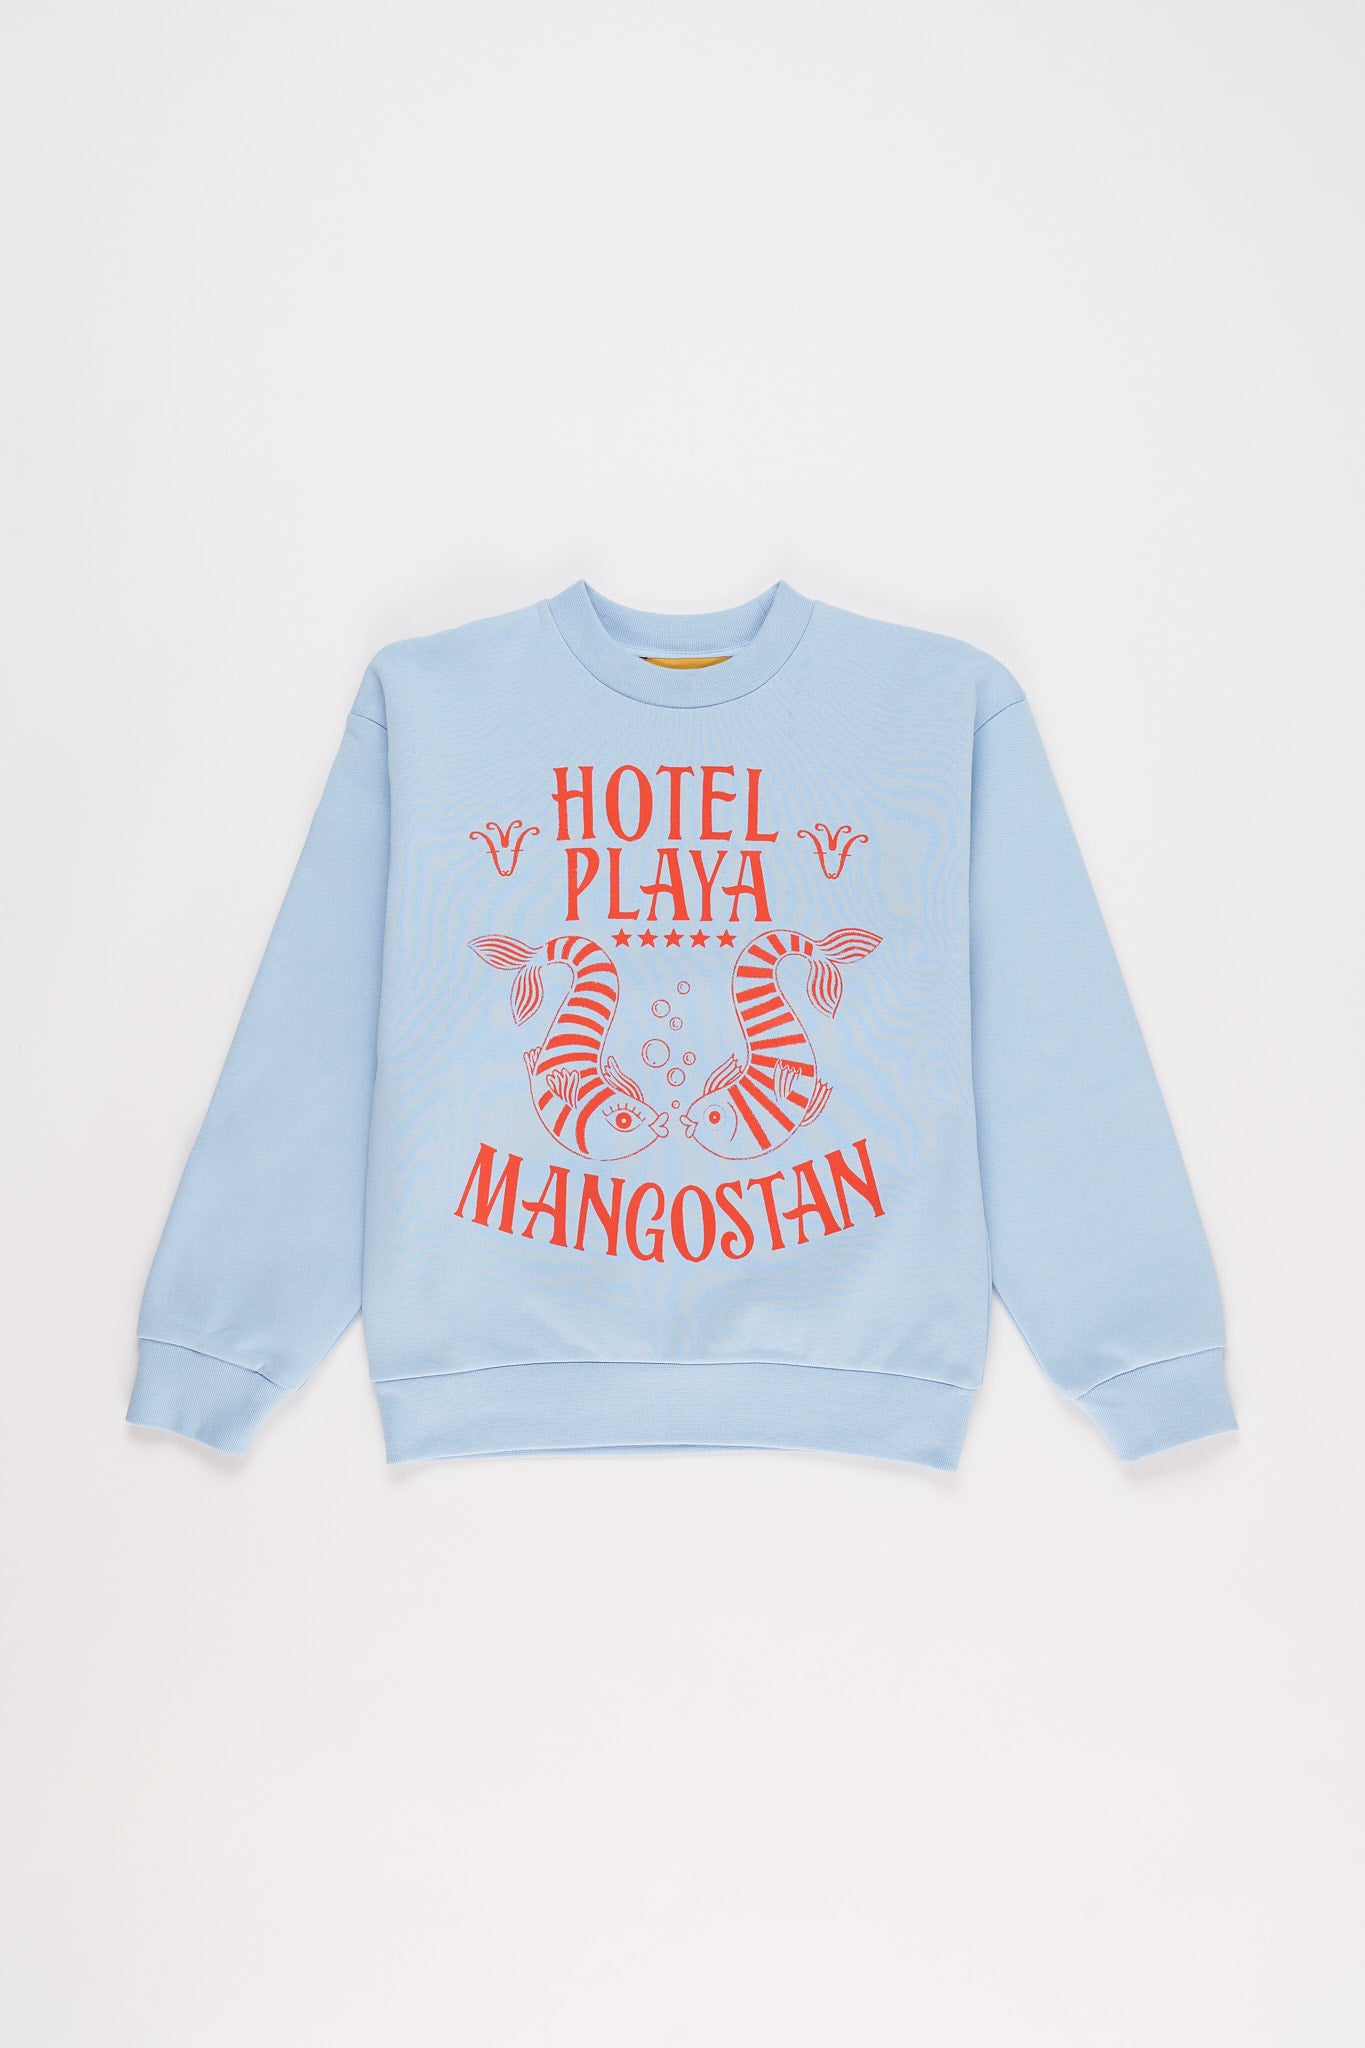 Maison Mangostan - hotel playa sweatshirt - light blue